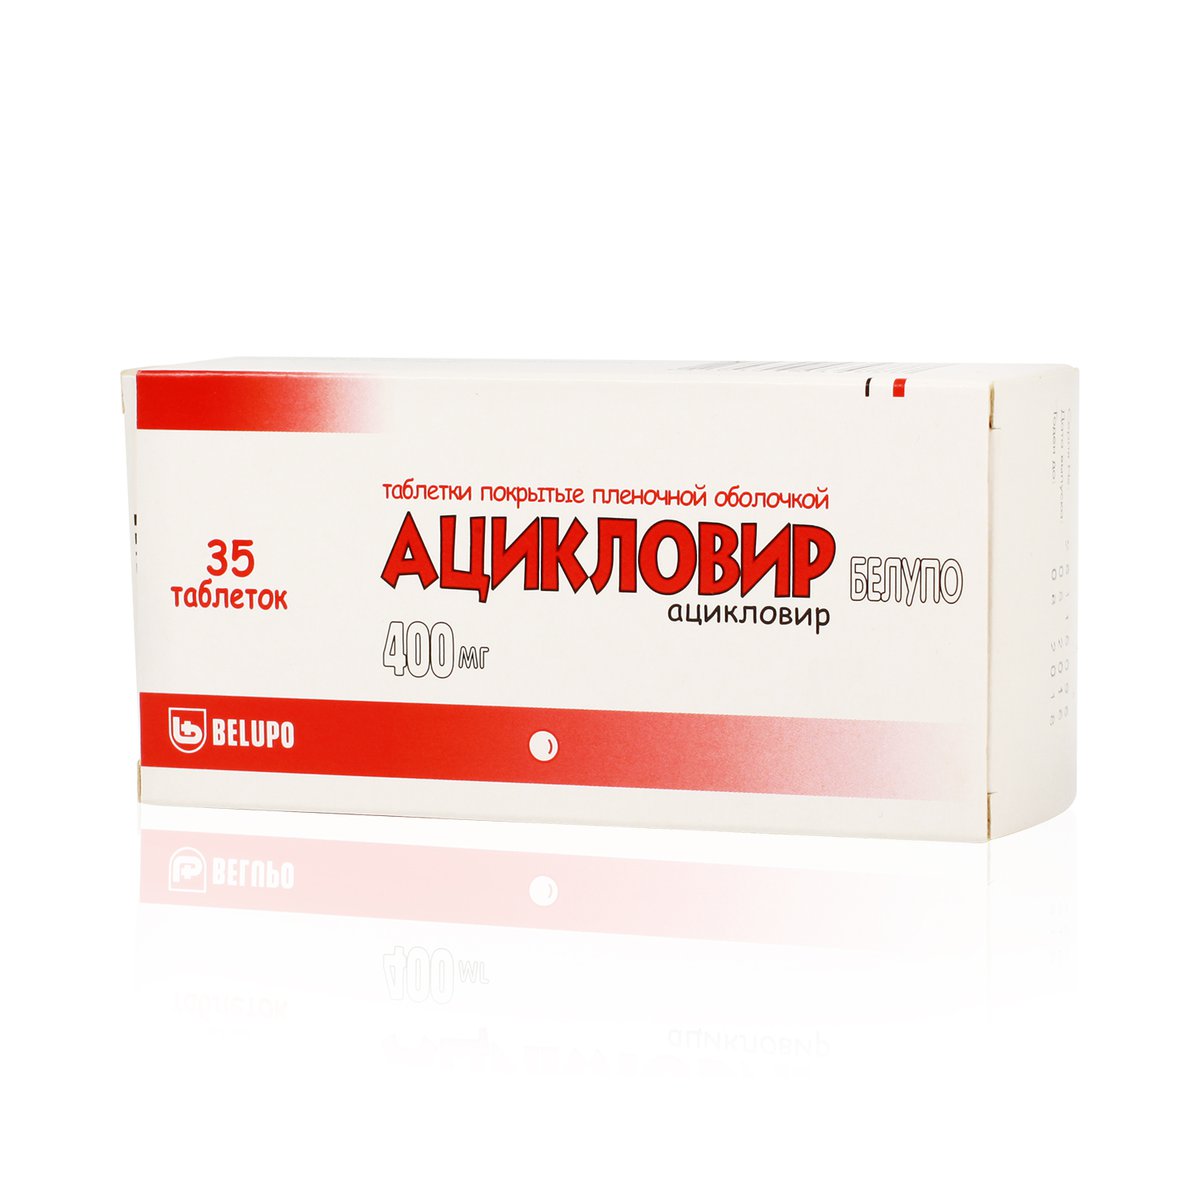 Ацикловир-белупо (таблетки, 35 шт, 400 мг) - цена,  онлайн в .